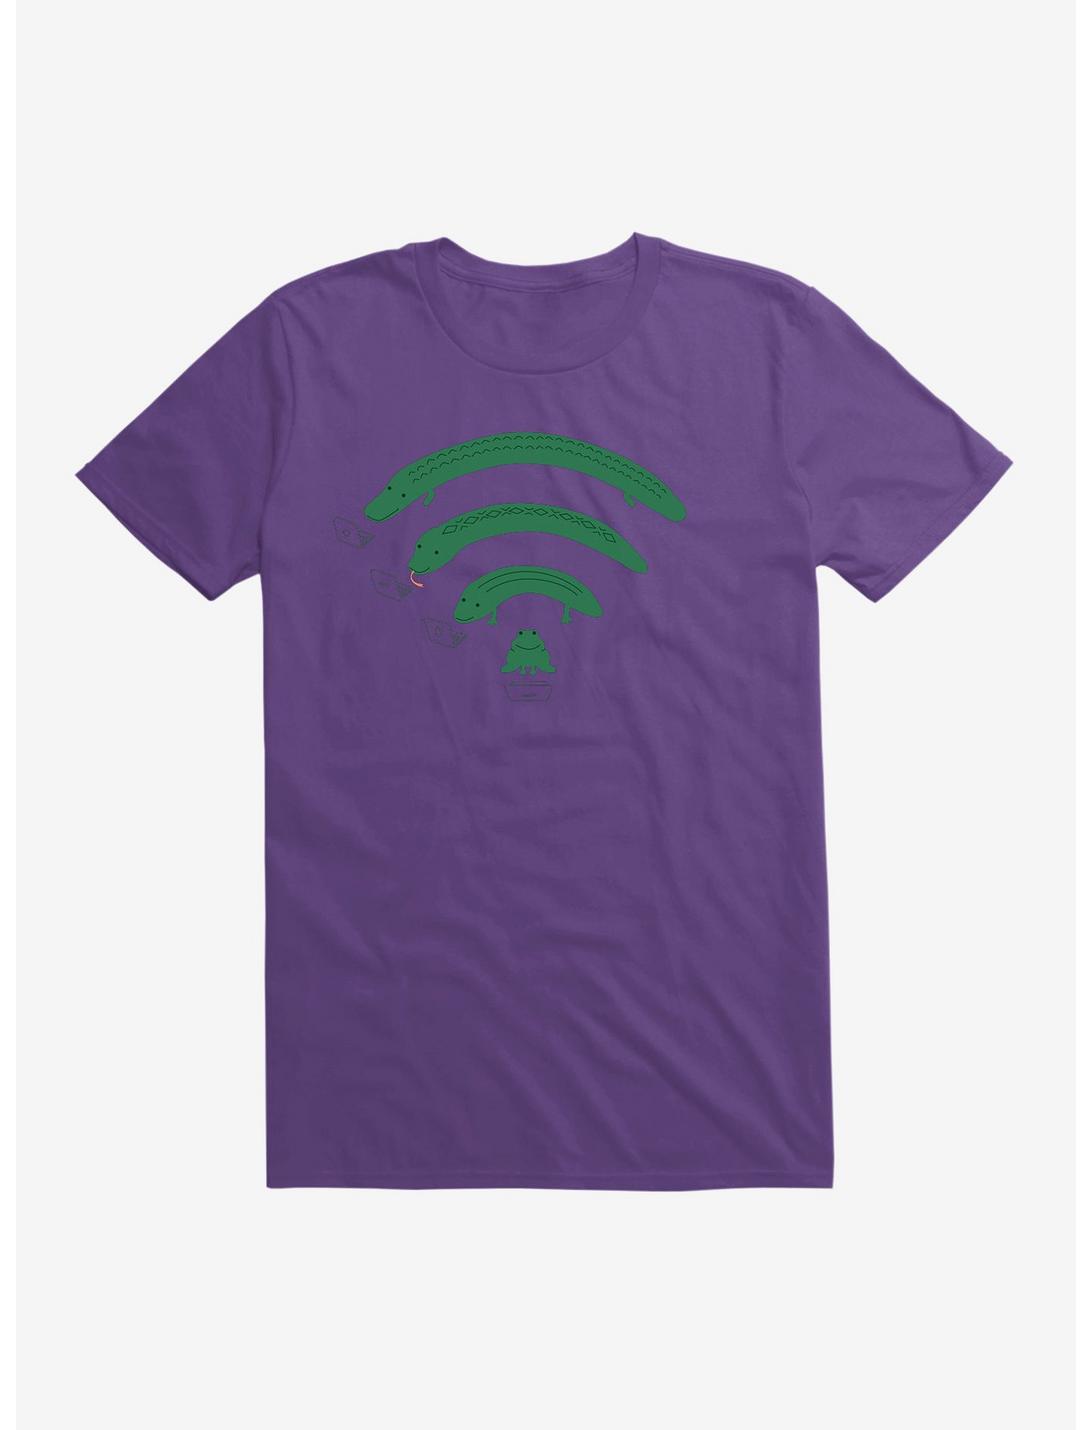 Everybody Loves The Internet T-Shirt, PURPLE, hi-res